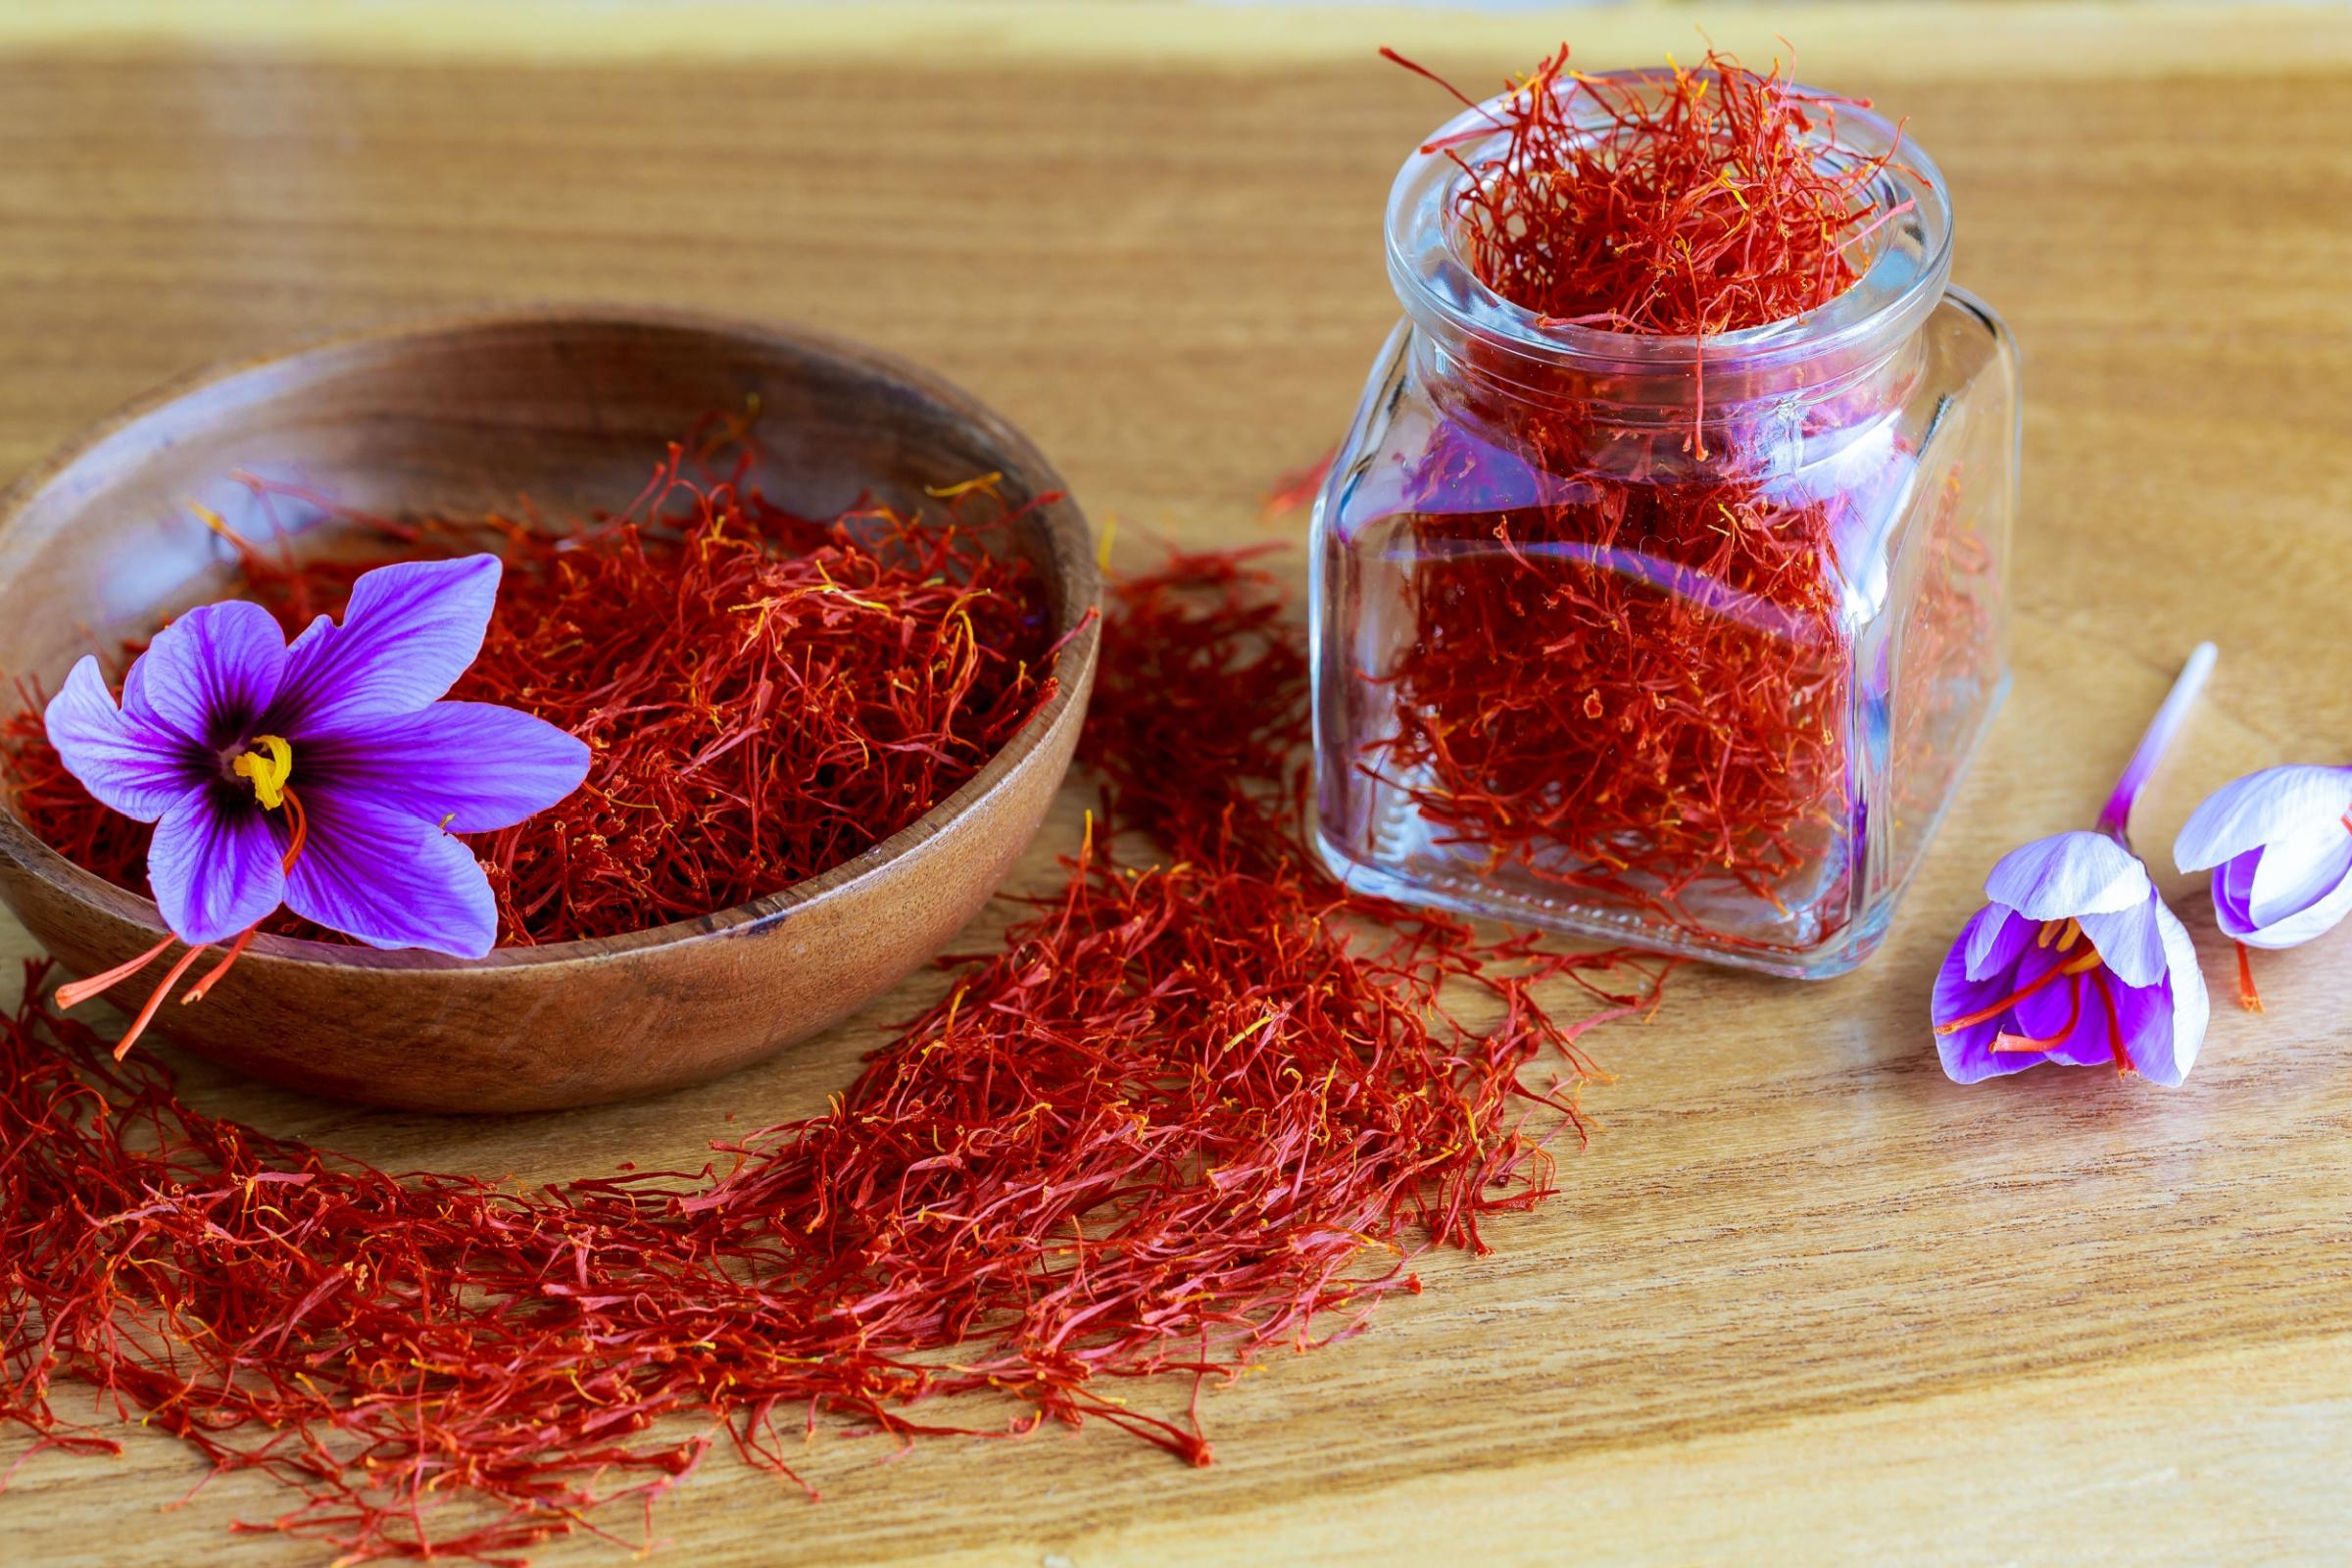 Saffron: A Promising Natural Treatment for Depression